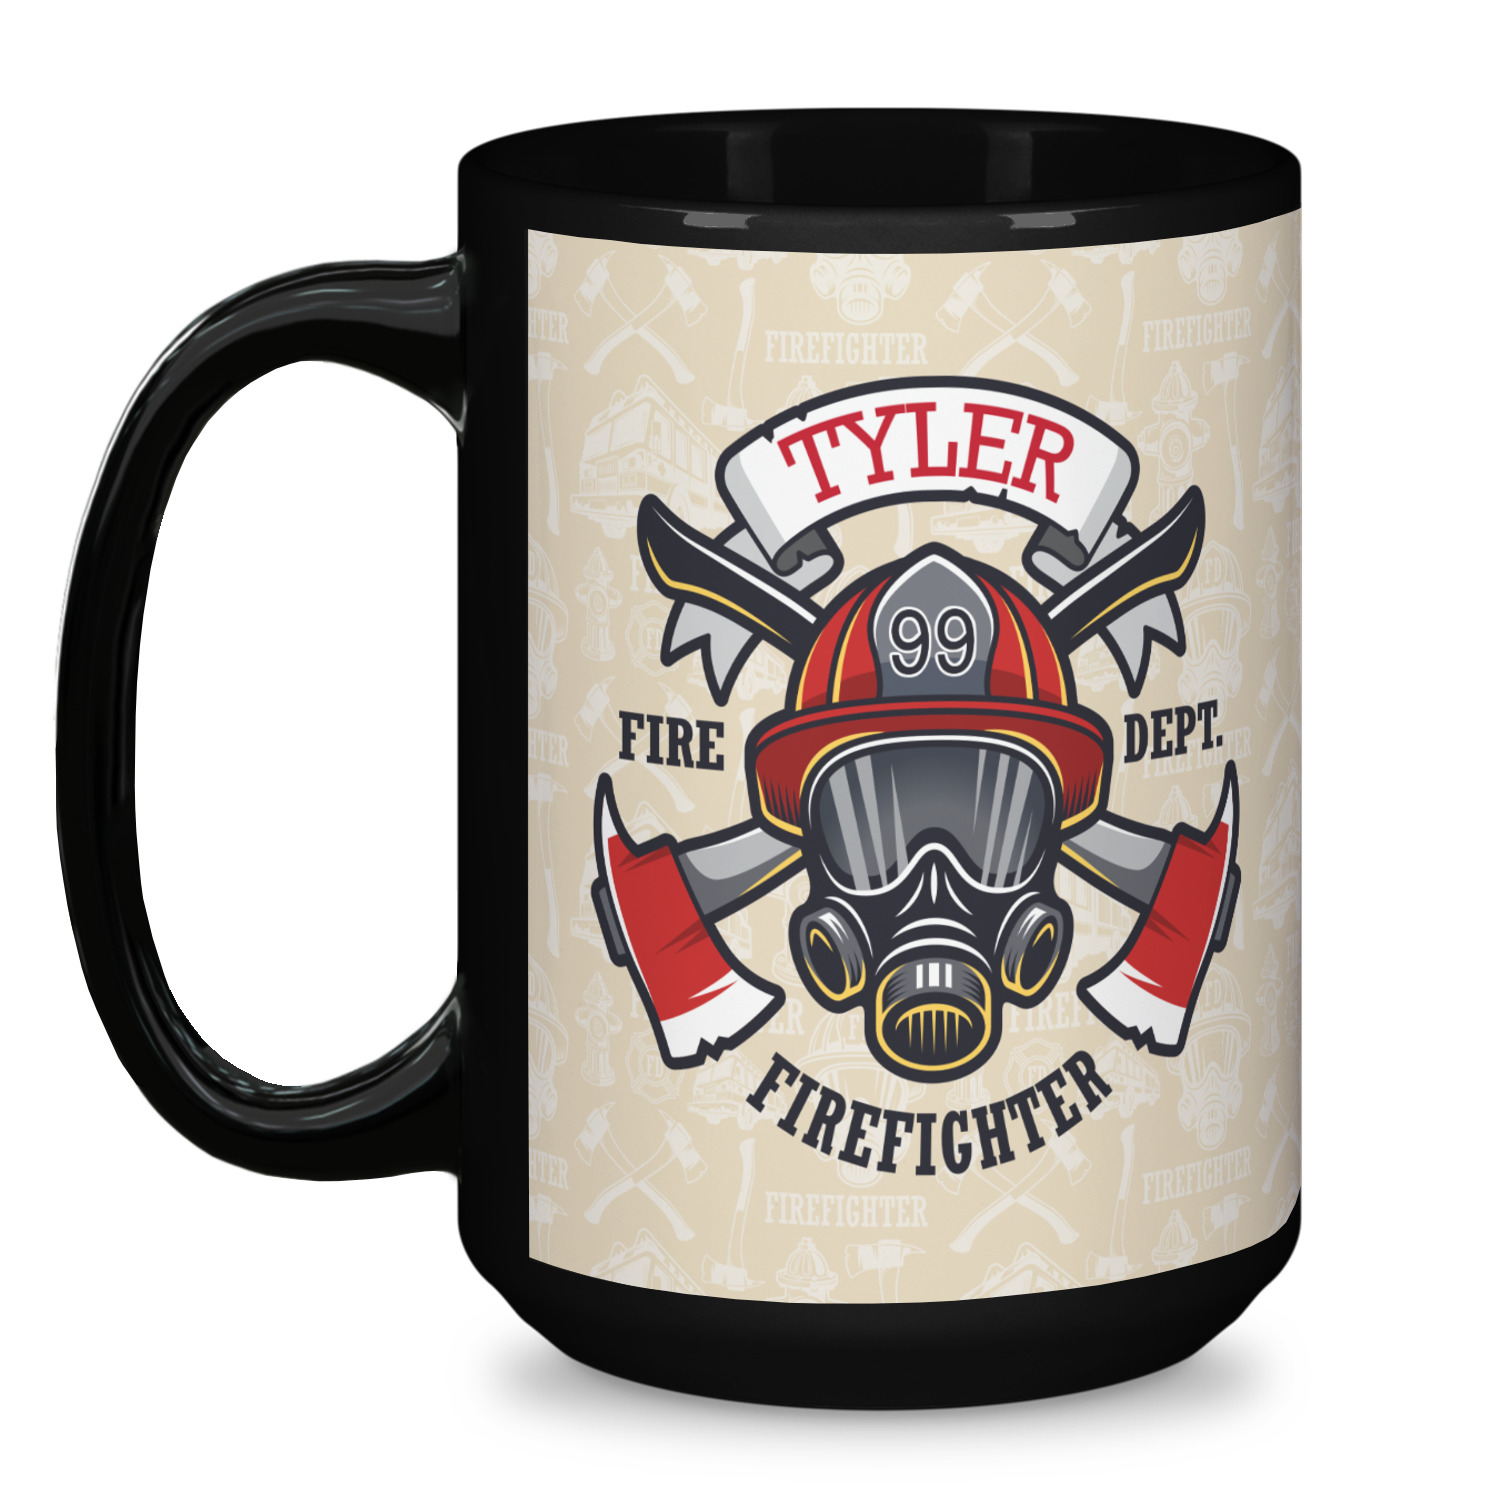 https://www.youcustomizeit.com/common/MAKE/1960007/Firefighter-Coffee-Mug-15-oz-Black.jpg?lm=1605802310